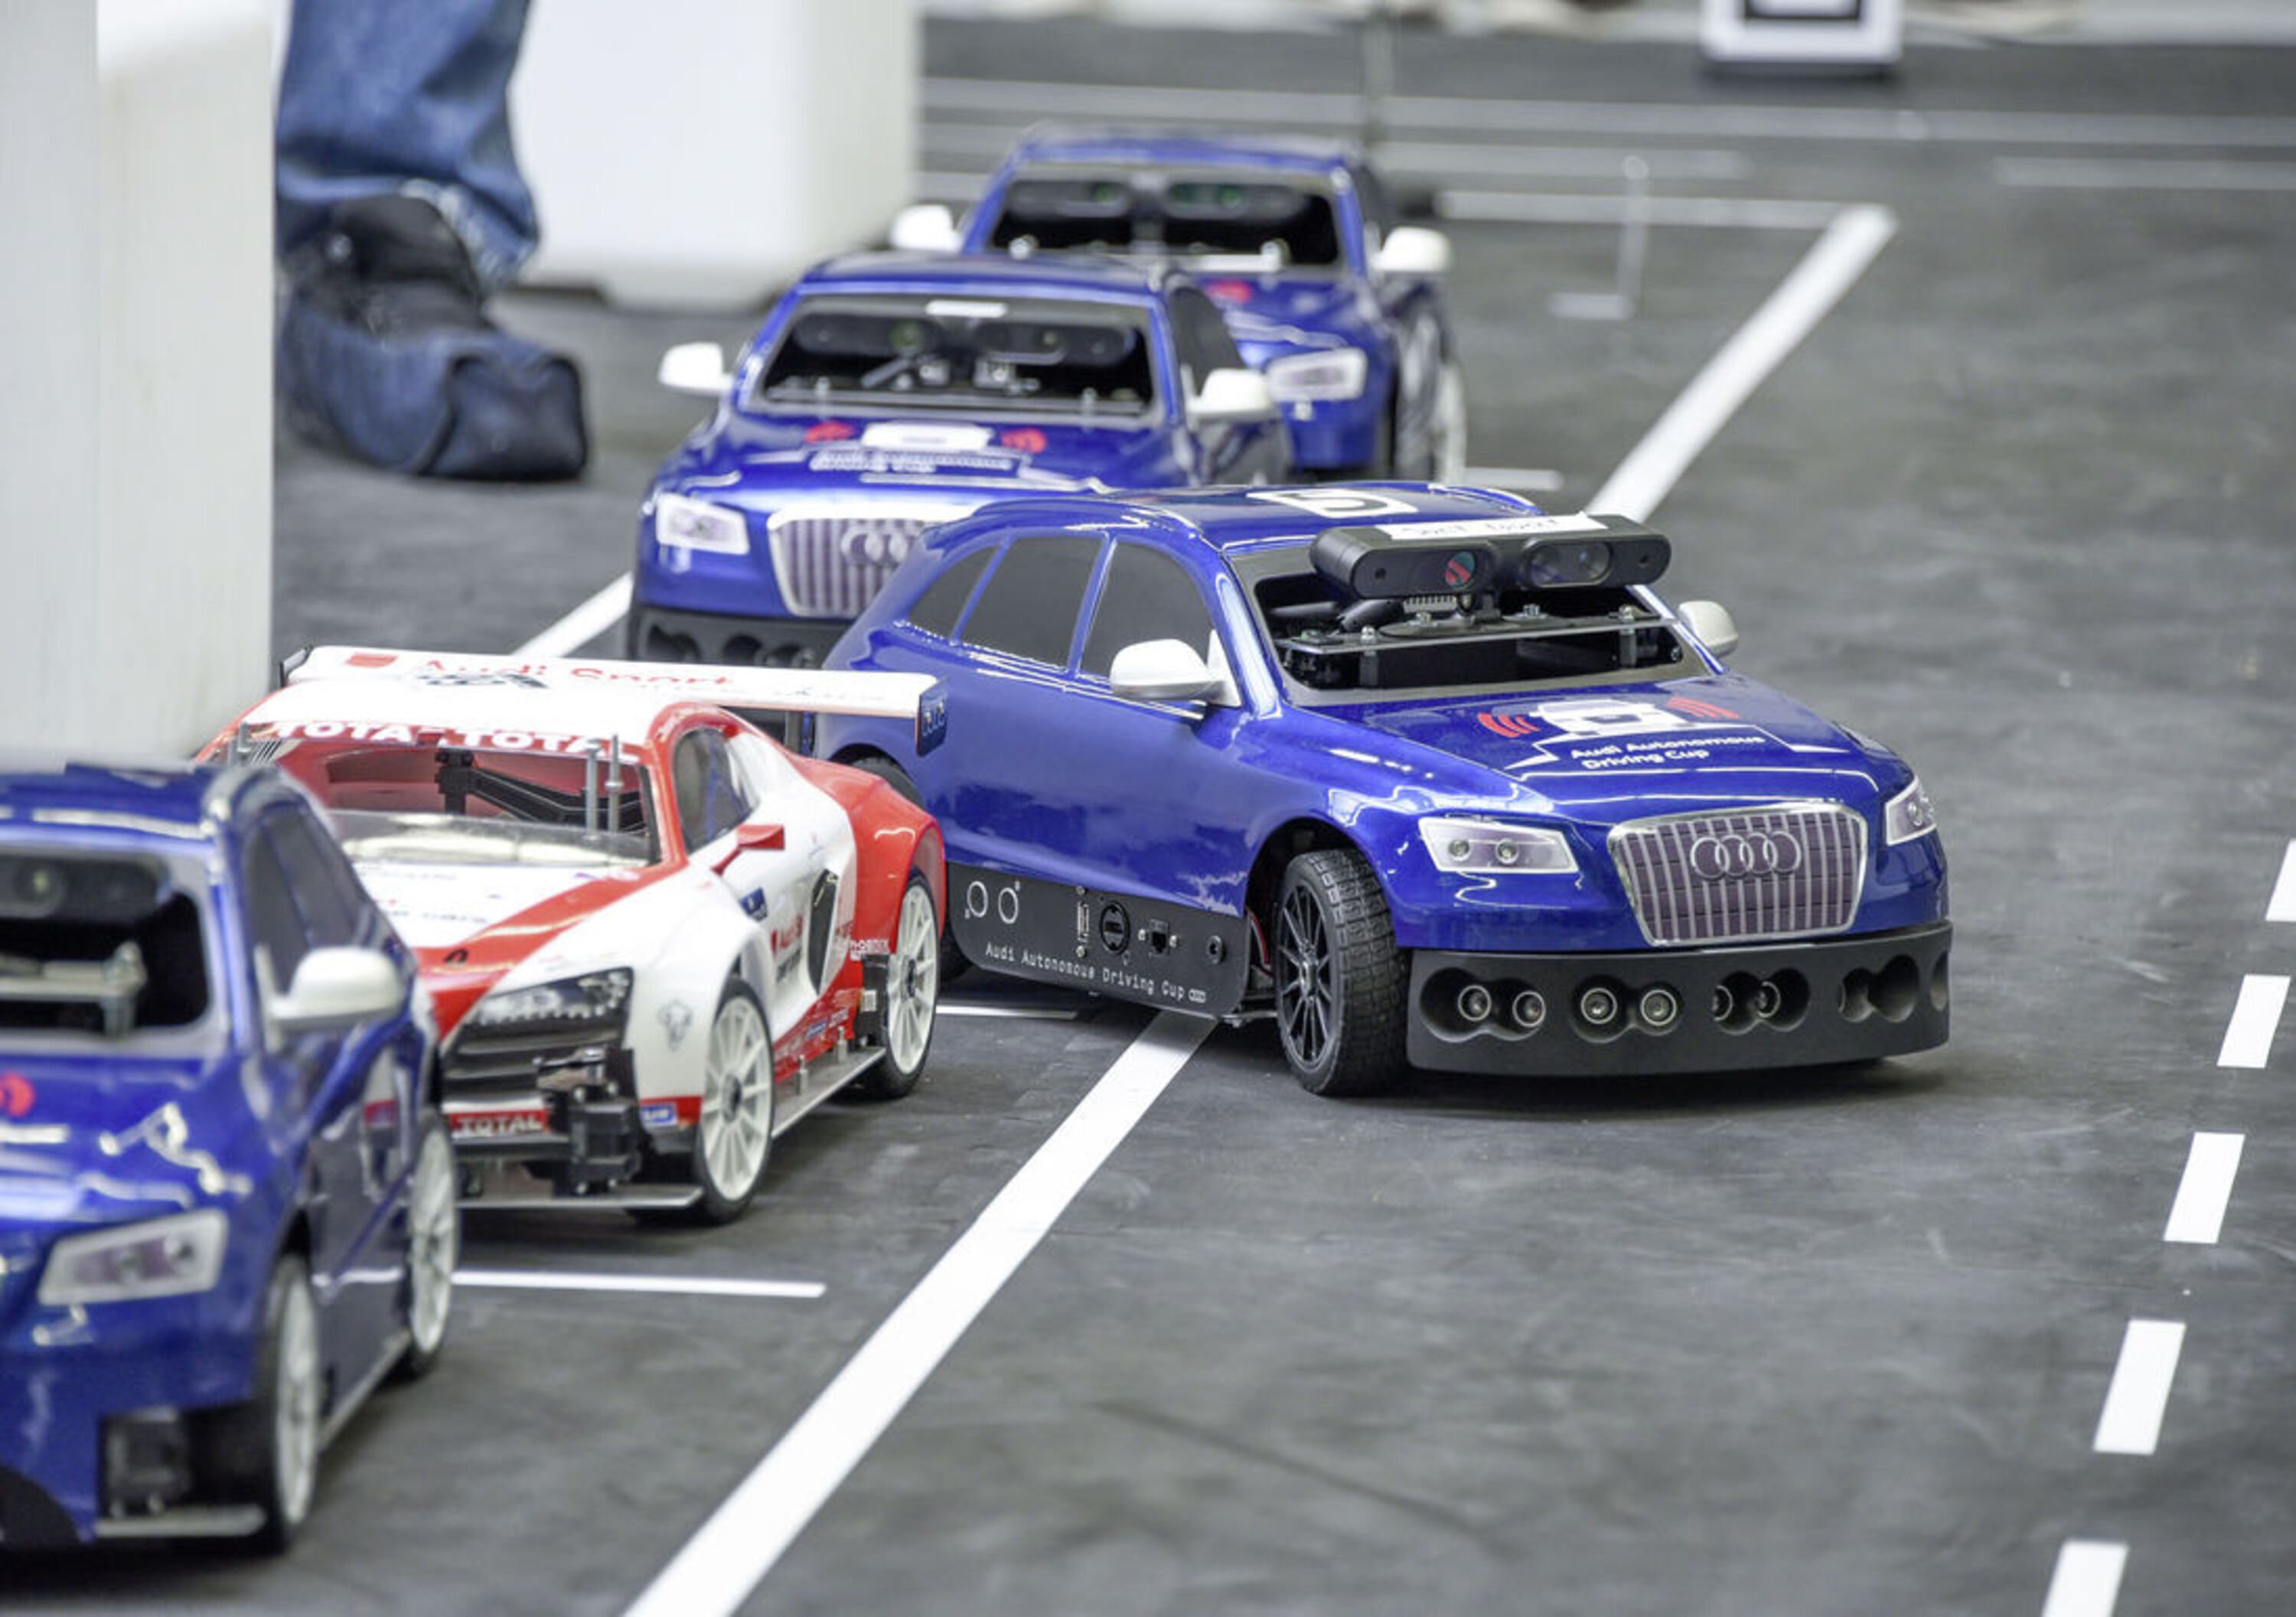 La corsa per &ldquo;automobiline&rdquo; autonome. E&#039; la Audi Autonomous Driving Cup